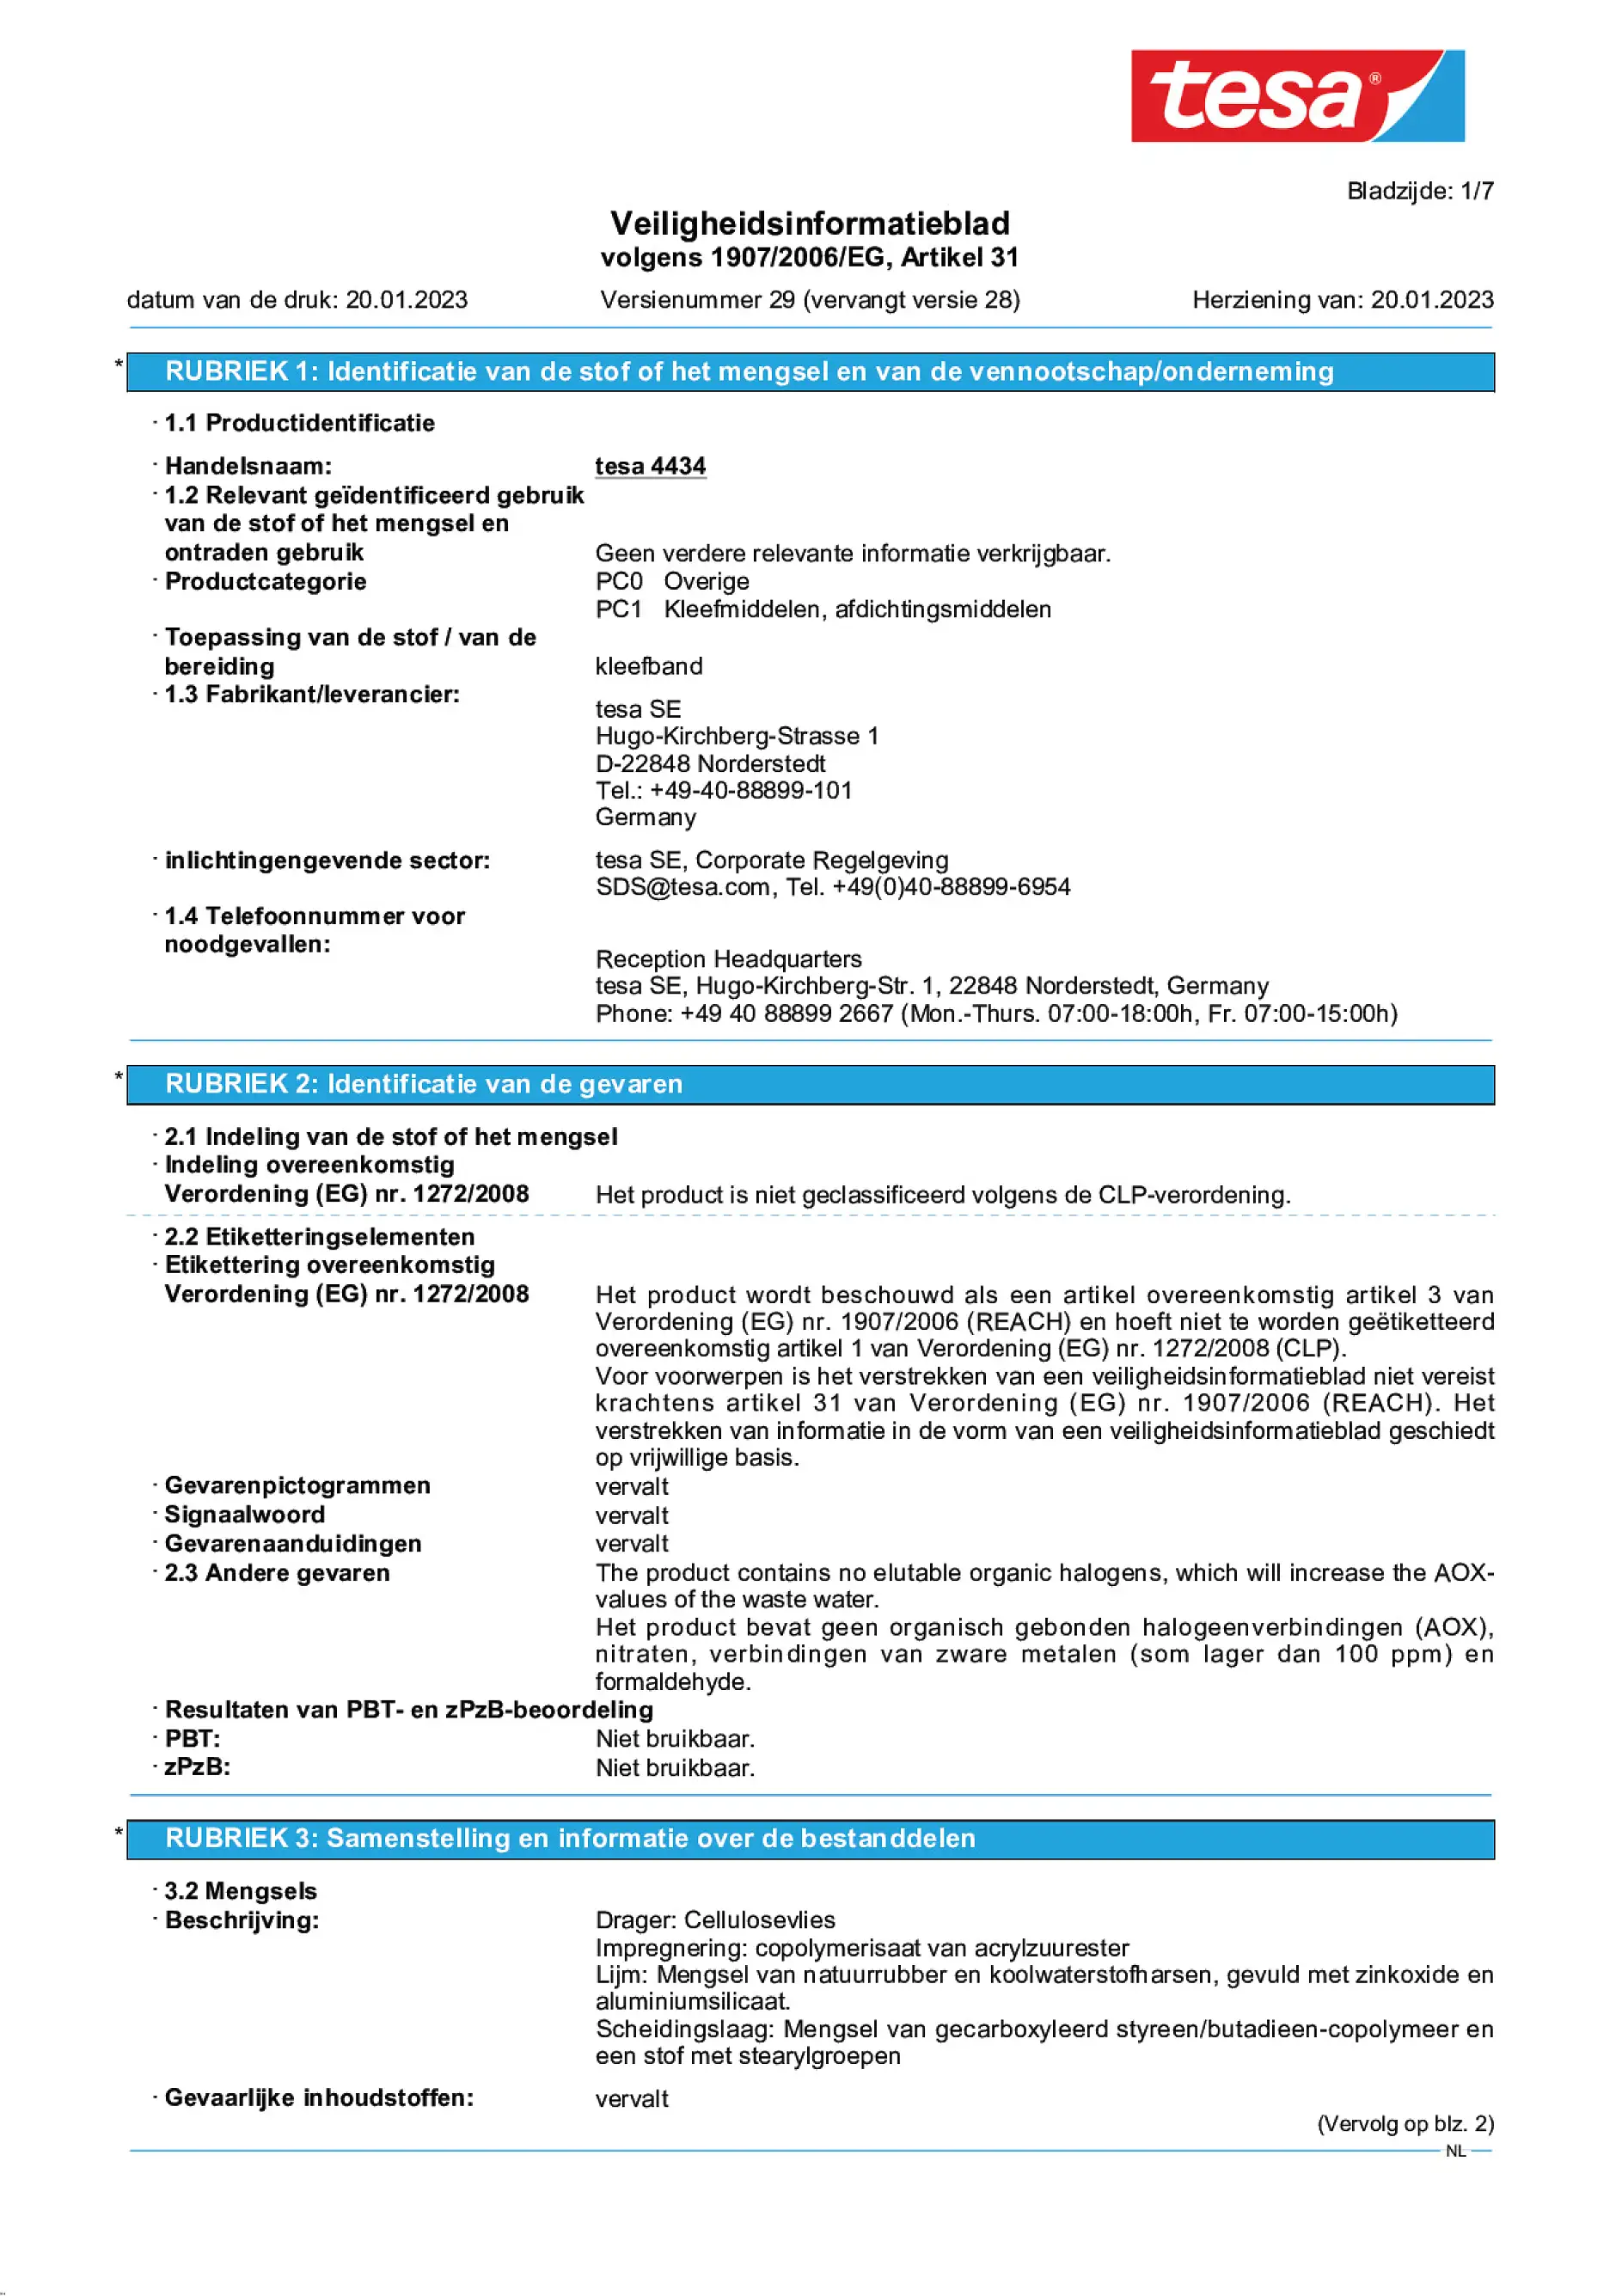 Safety data sheet_tesa® 04434_nl-NL_v29